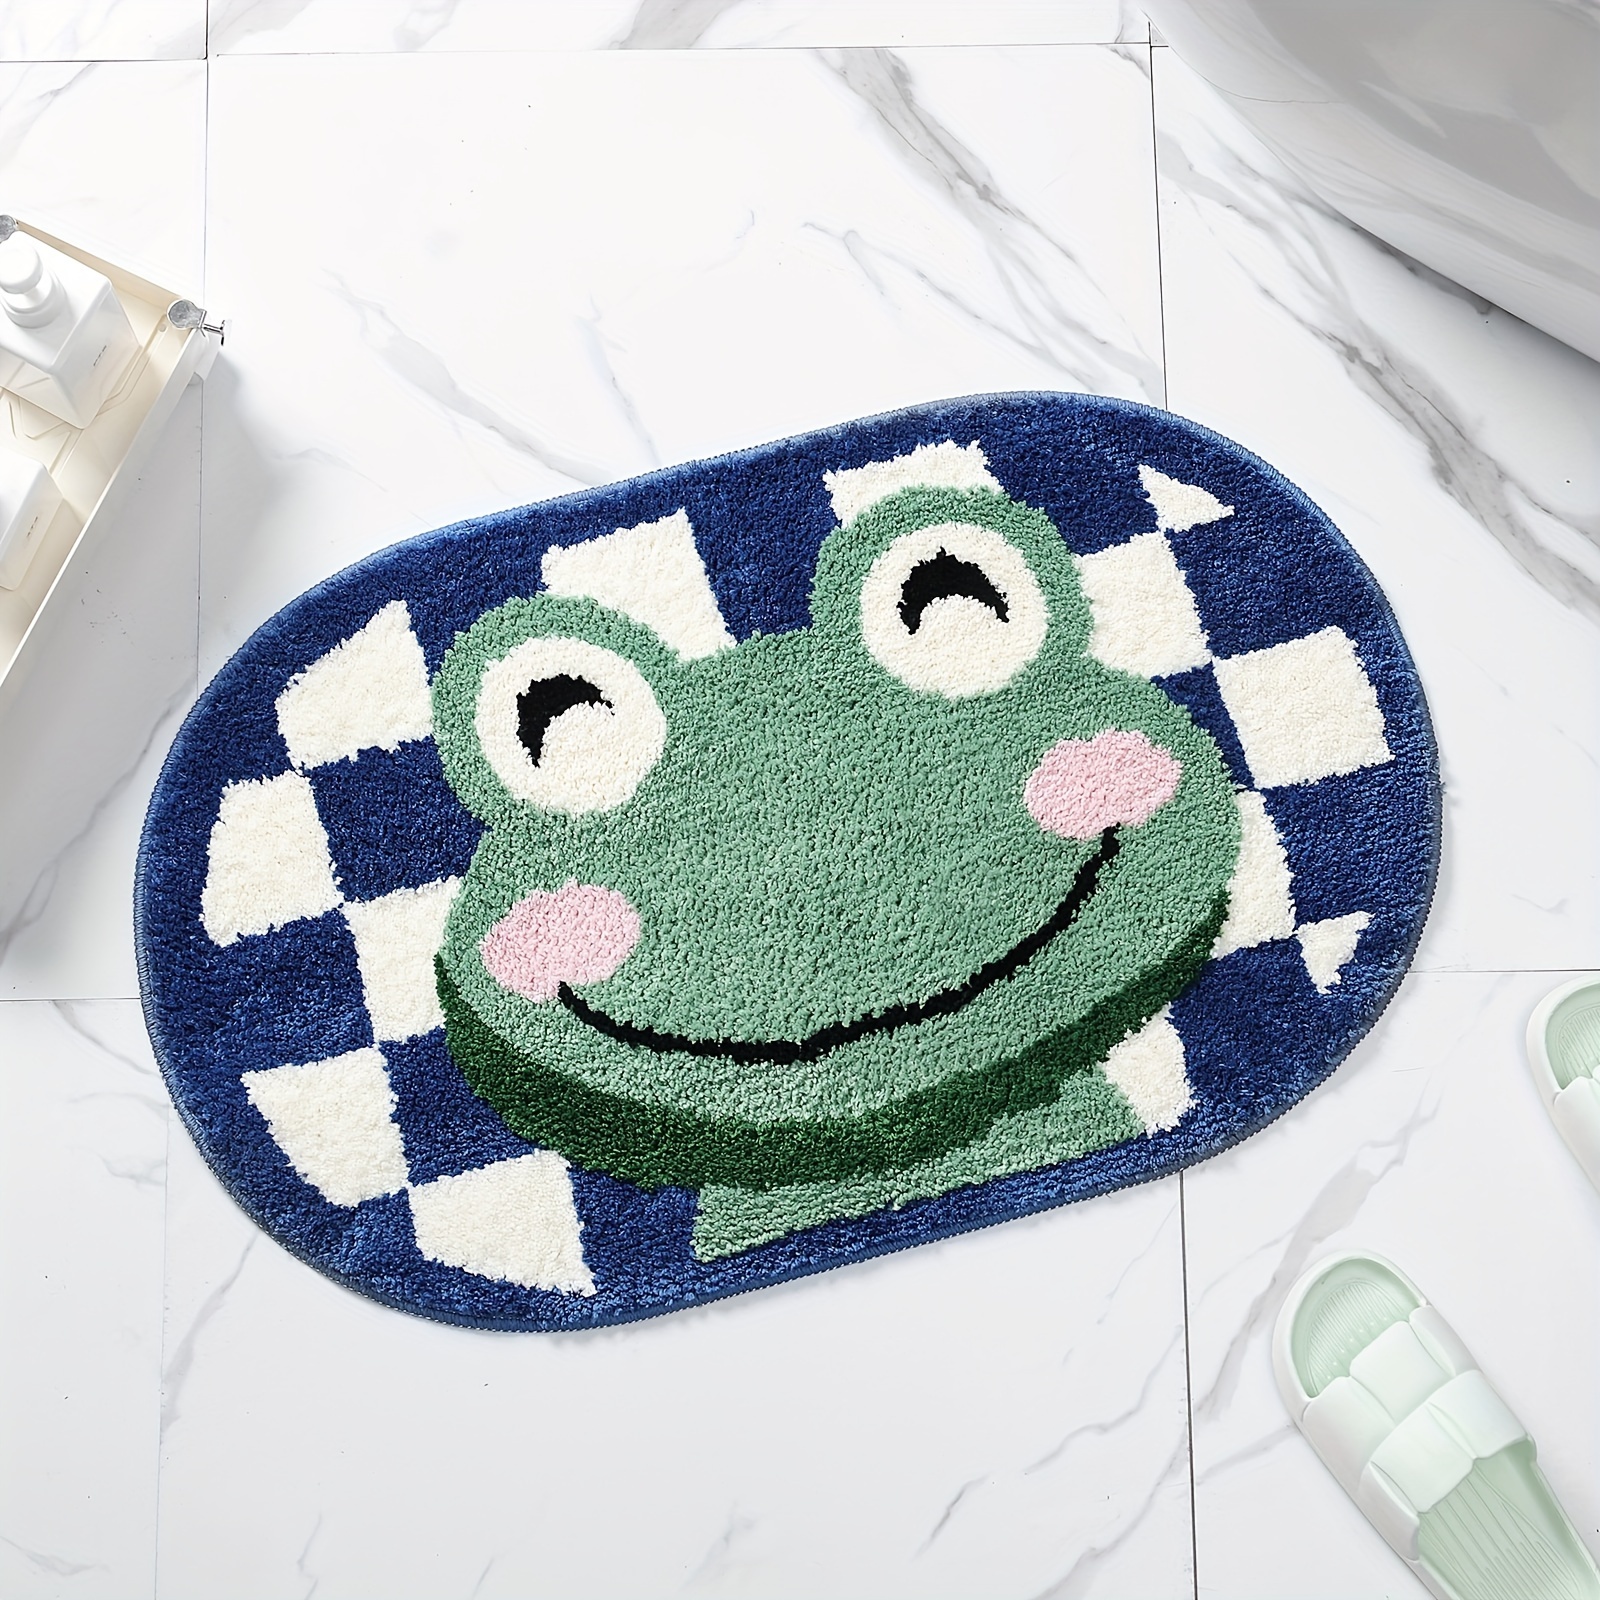 

Cute Bath Mat, Thick Soft Absorbent Microfiber Frog Bathroom Rug, Non-slip Cute Bath Rugs, Machine Wash Dry, Bathroom Mats For Bathroom Floor, Bathtub, Shower, Sink And Decor